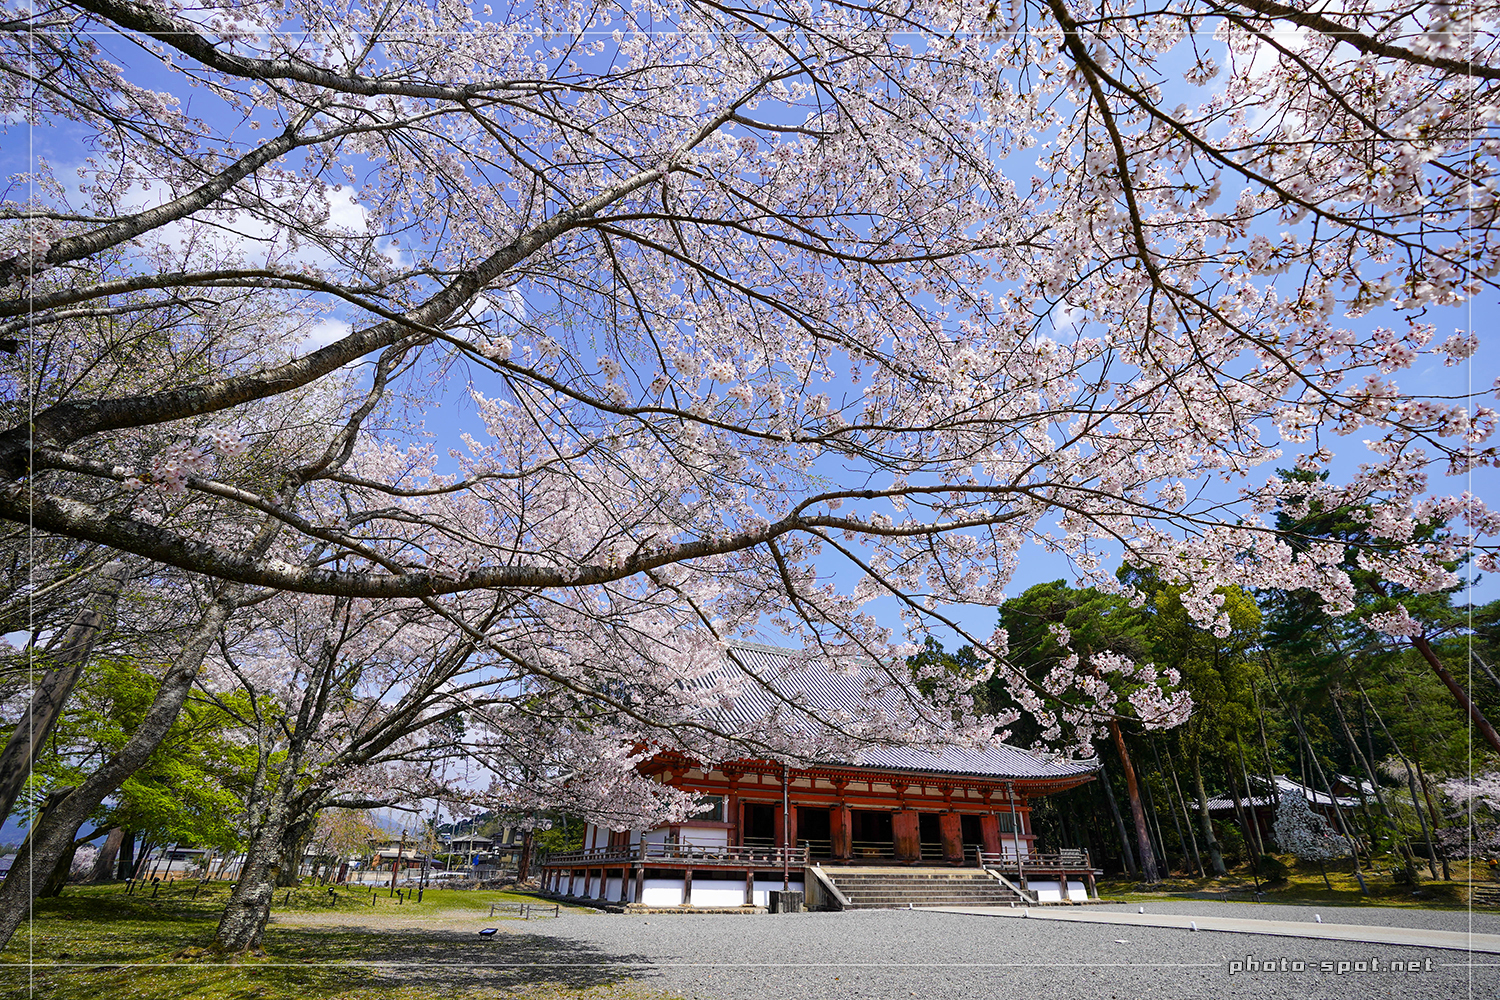 醍醐寺 伽藍 国宝の金堂と桜